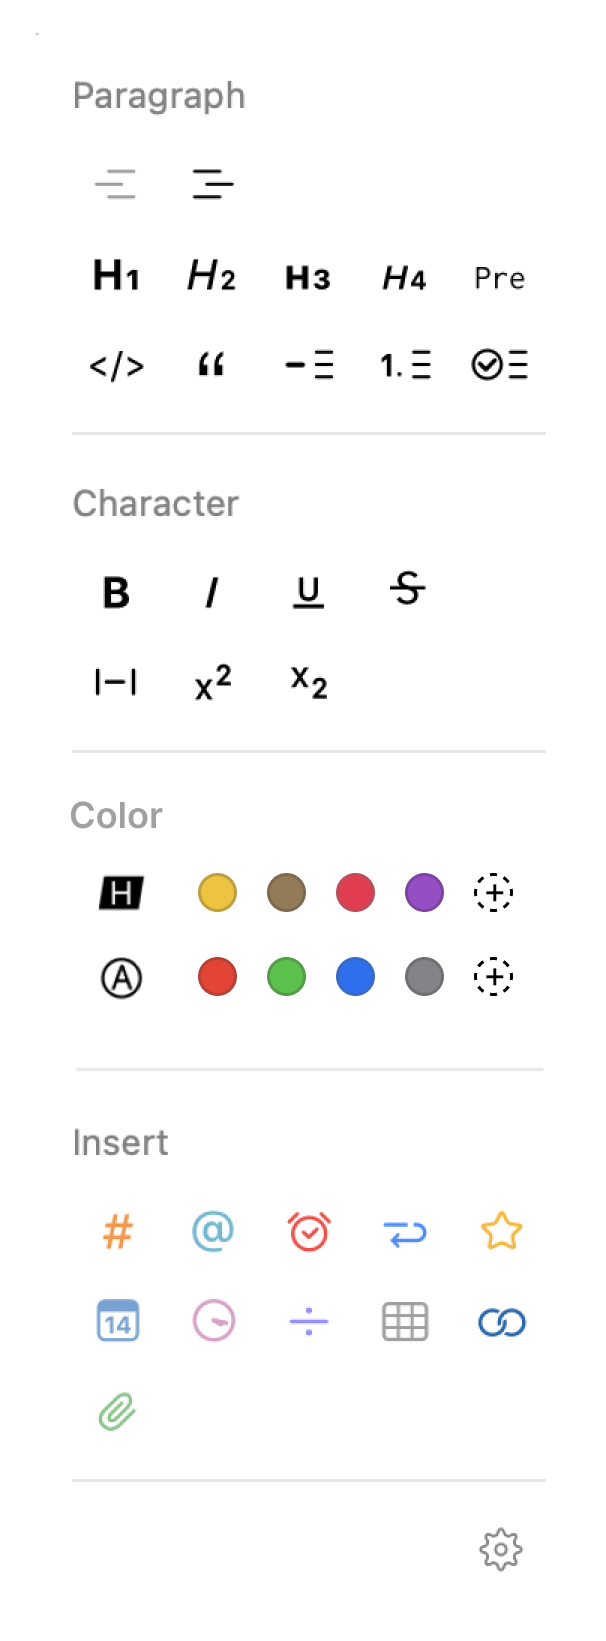 Little dot panel (color section)